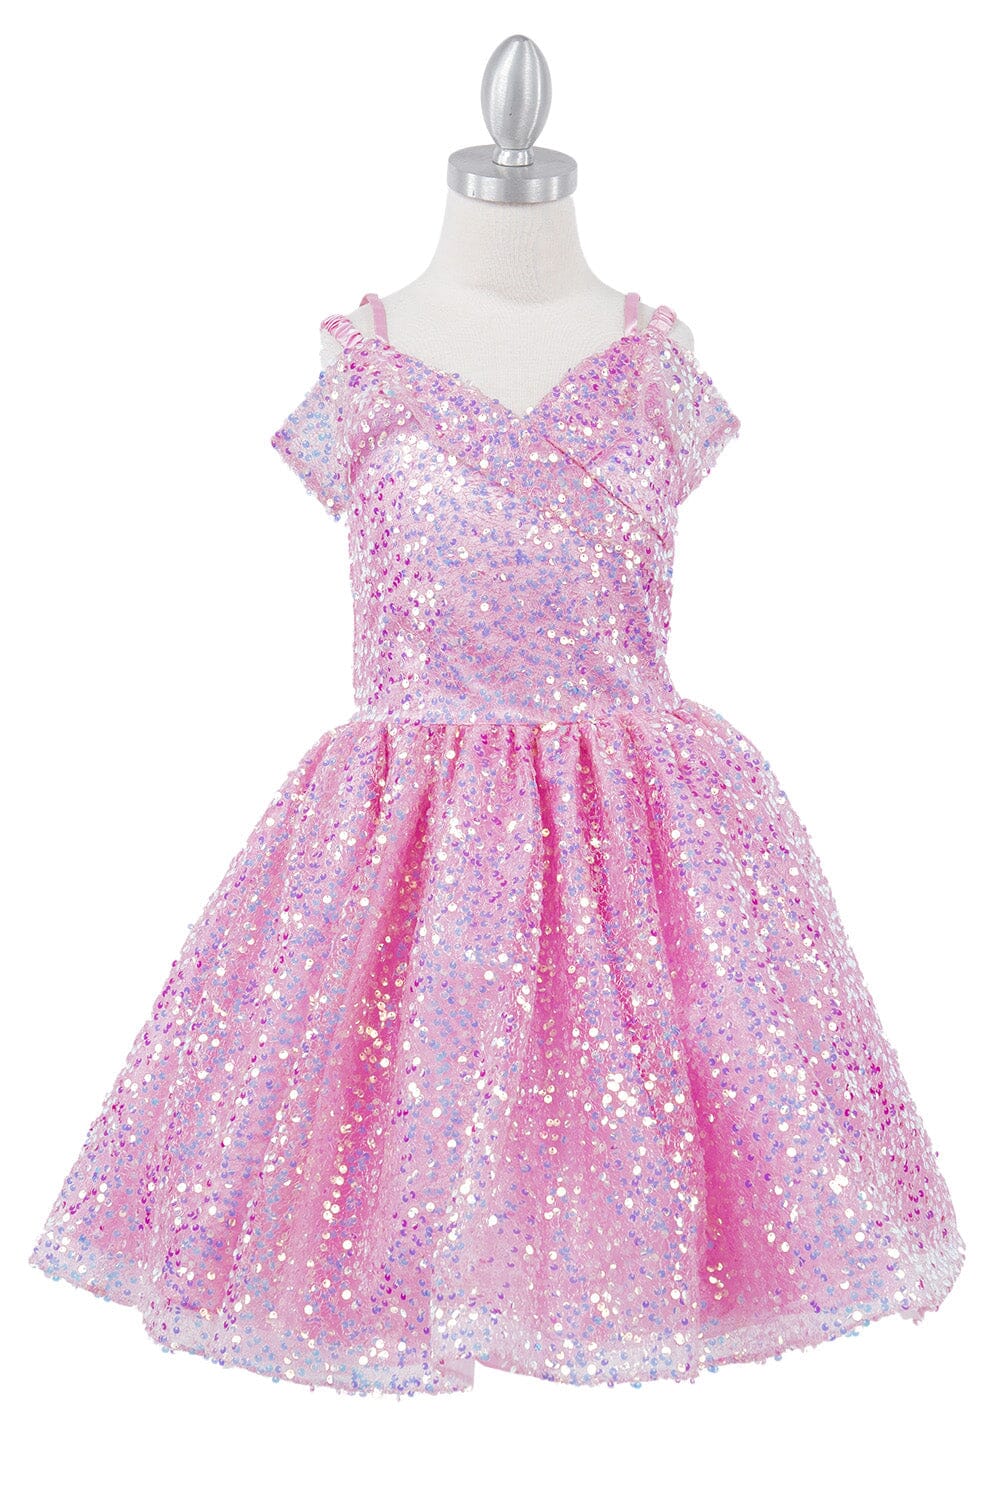 Cinderella Couture 5122X pink